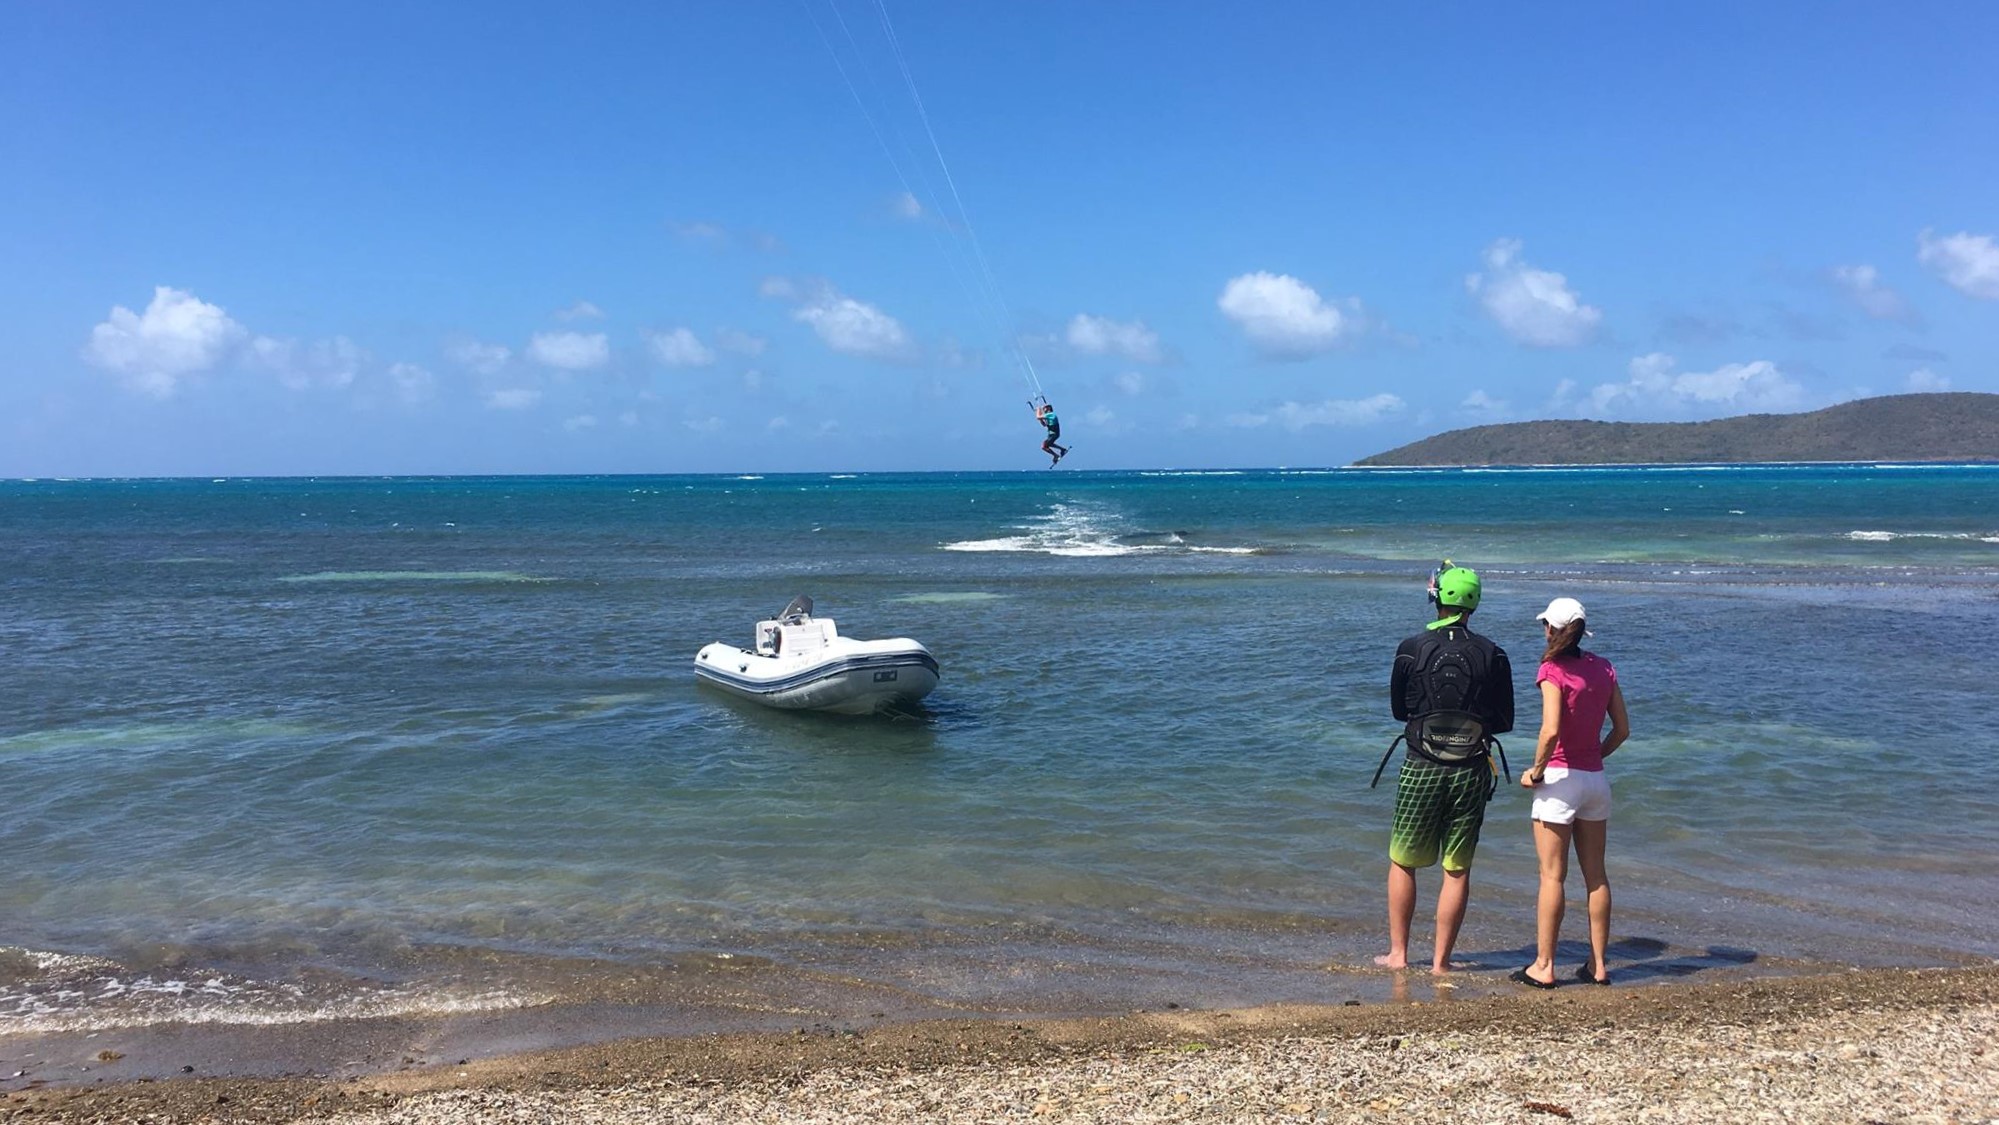 Kitesurf instruction in the Virign Islands